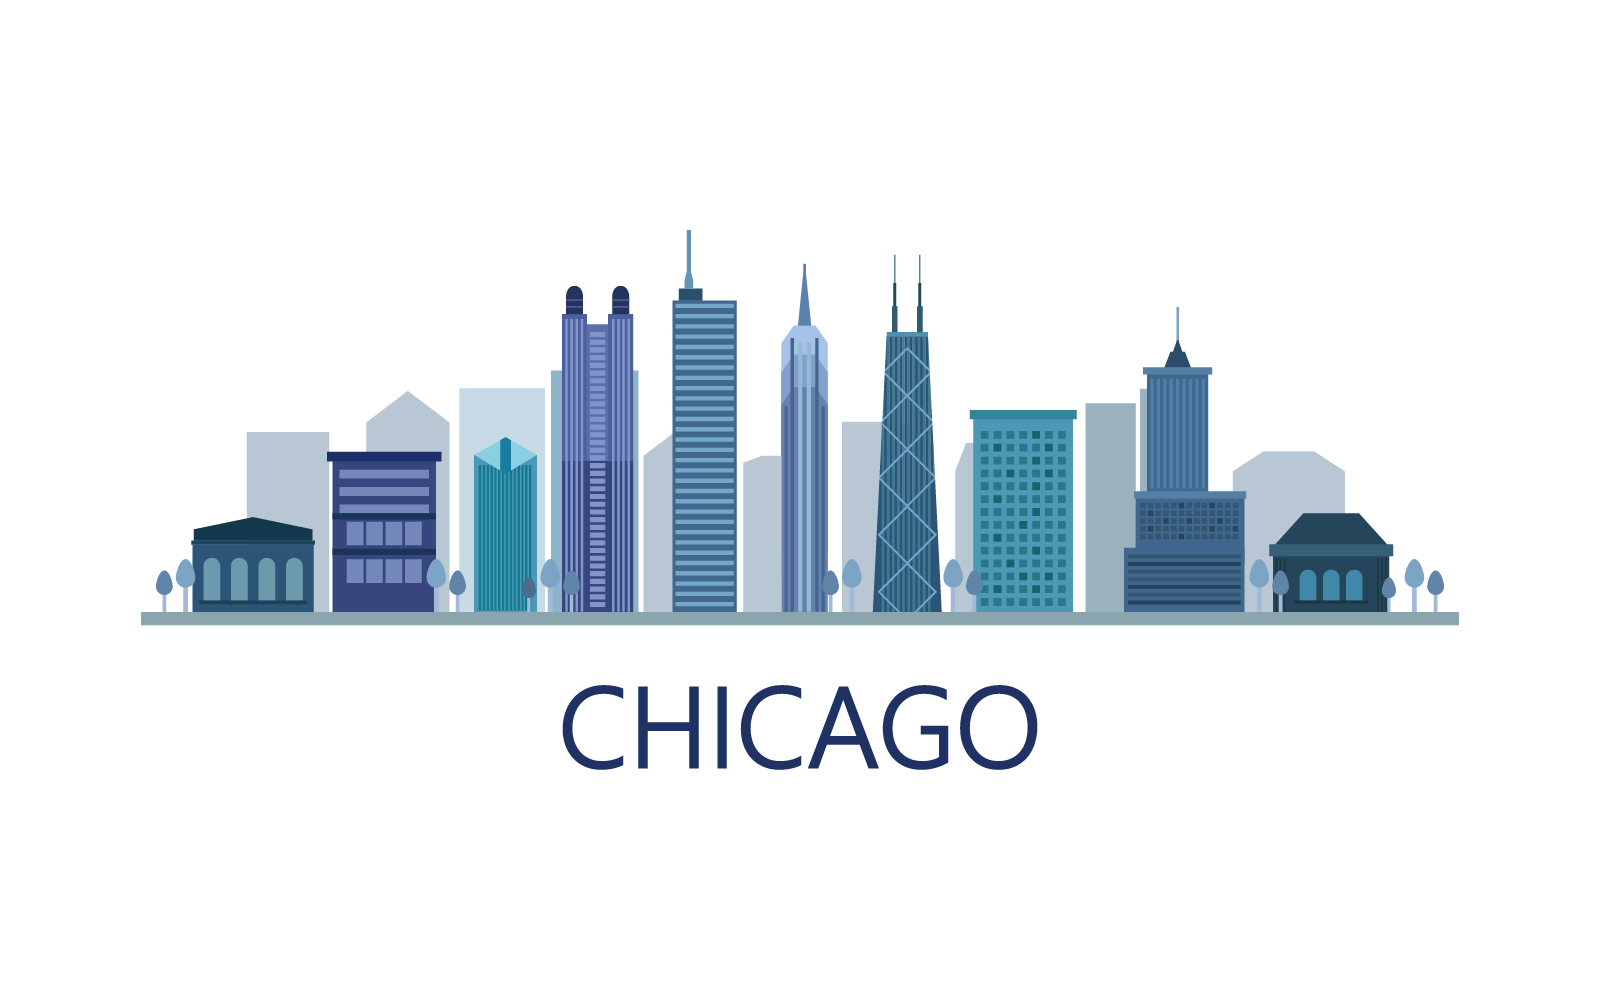 Chicago skyline vectorized on white background